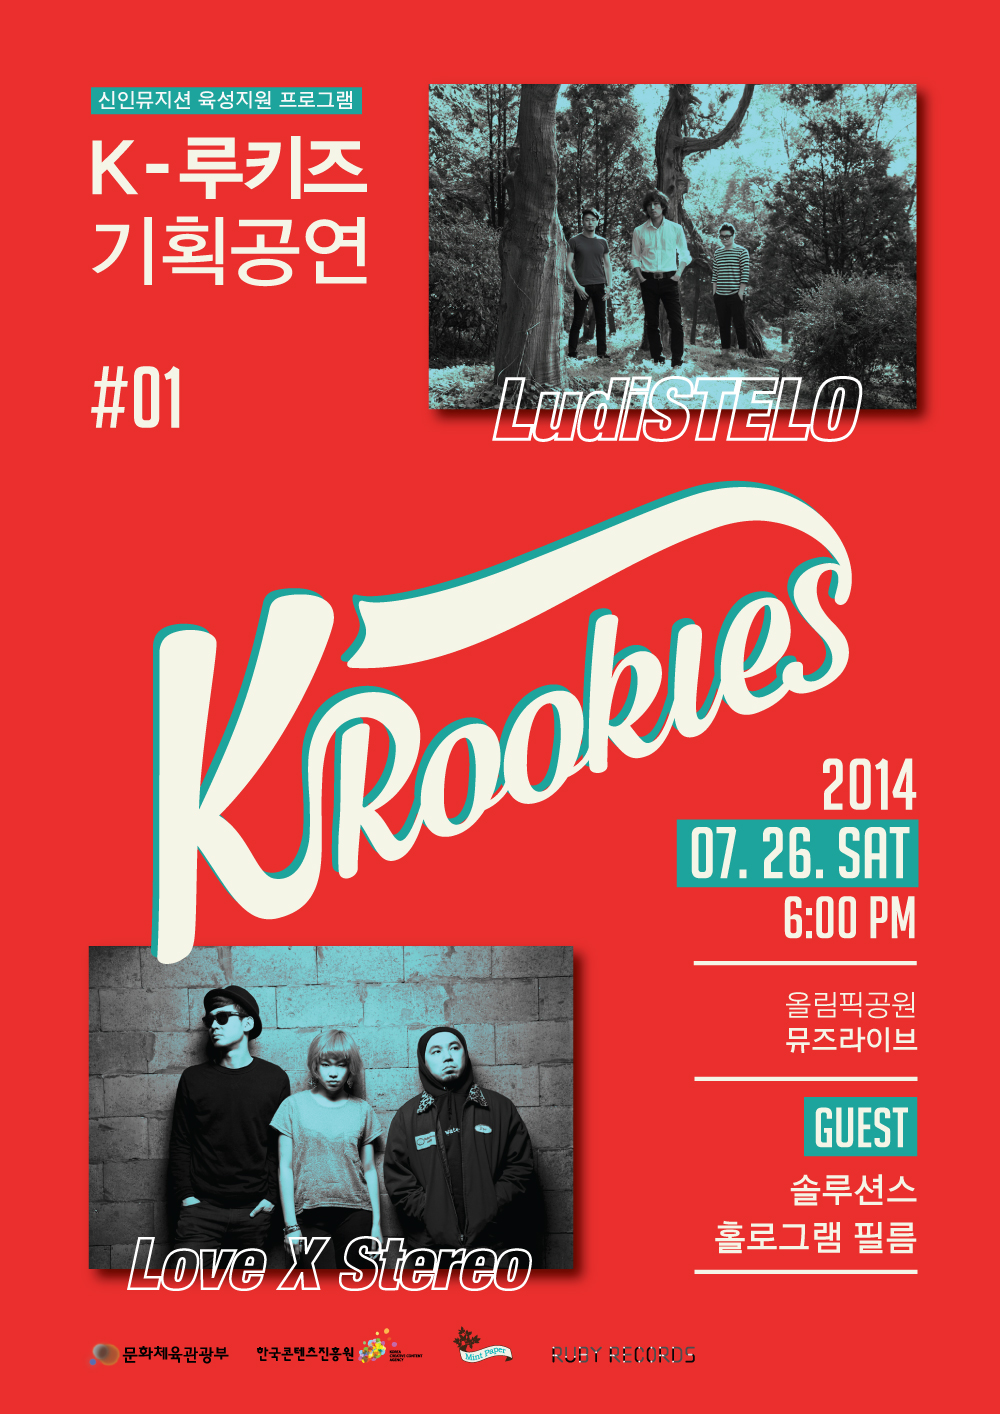 Love X Stereo & LudiSTELO to perform K-rookies #01